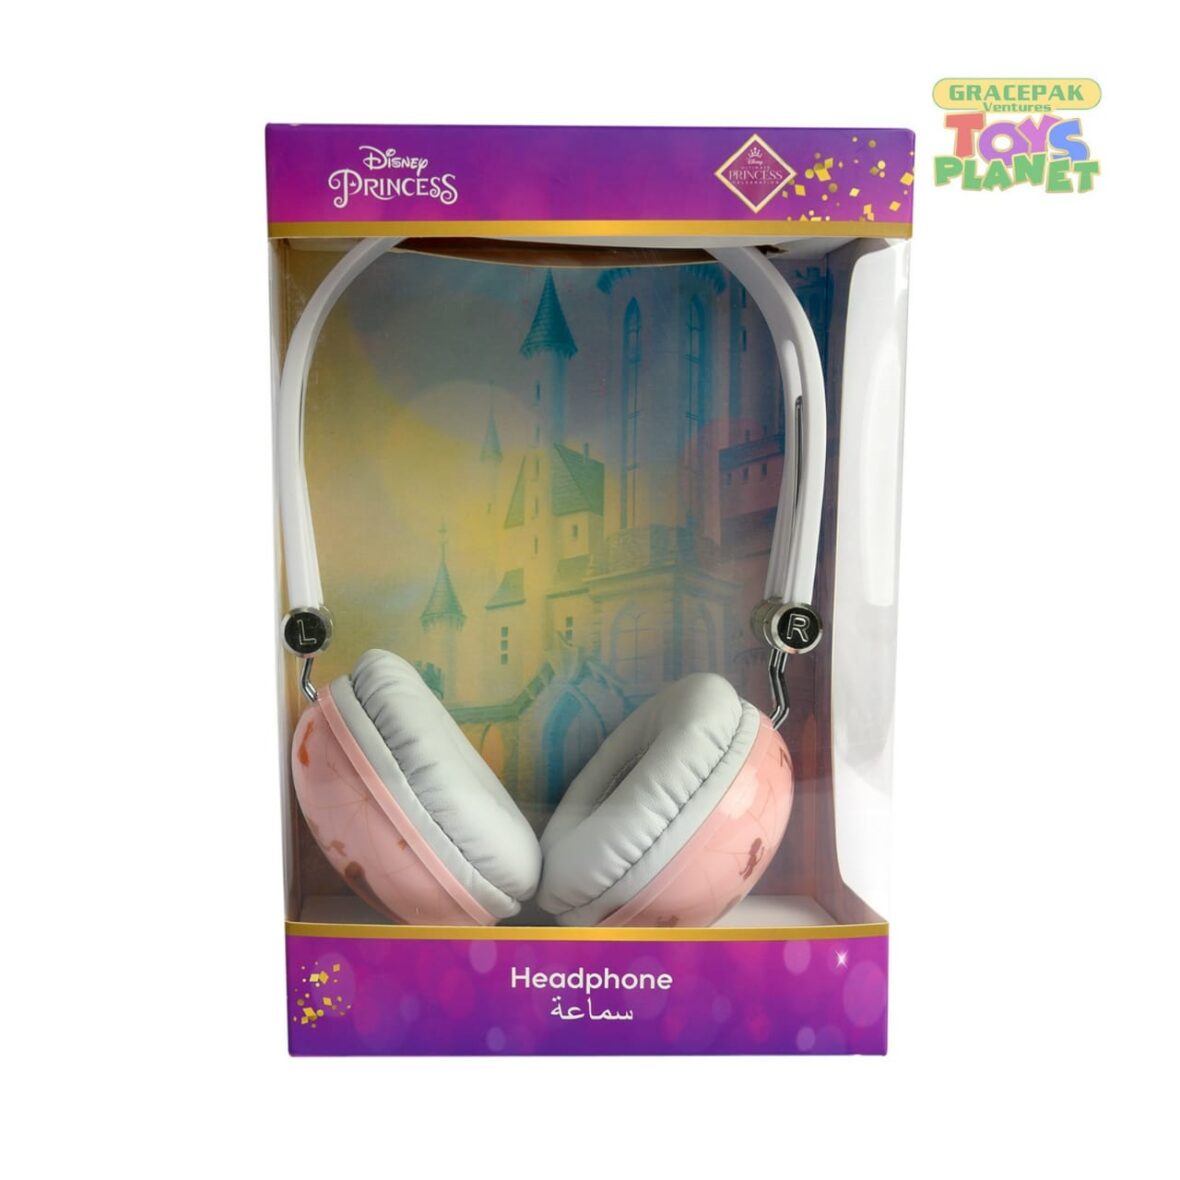 Princess Headphones